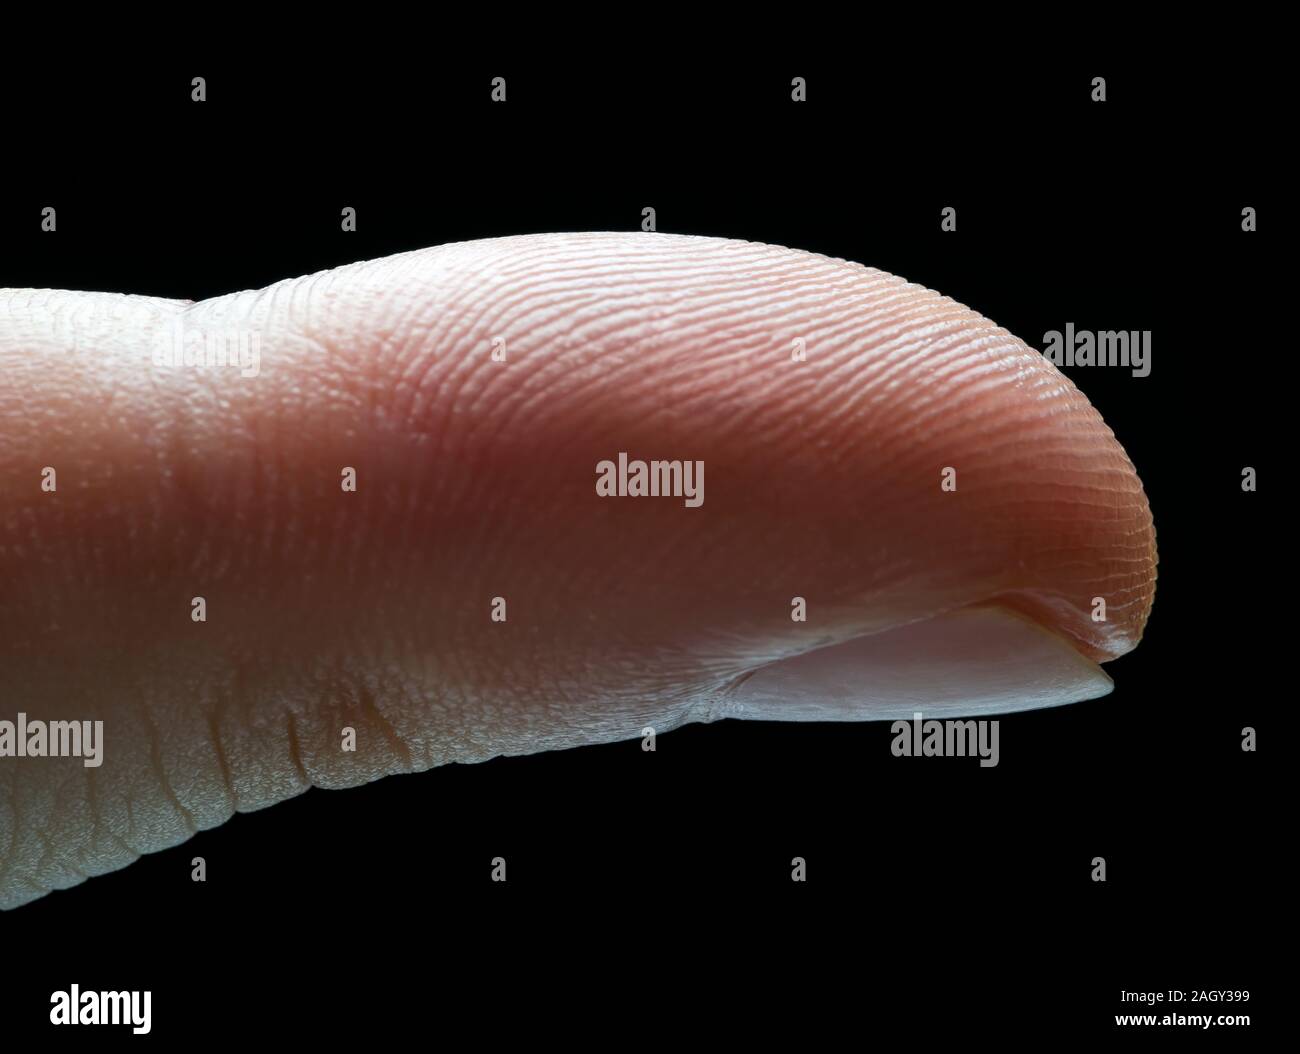 Photo of side index finger with illumination showing fingerprint over black background. Stock Photo